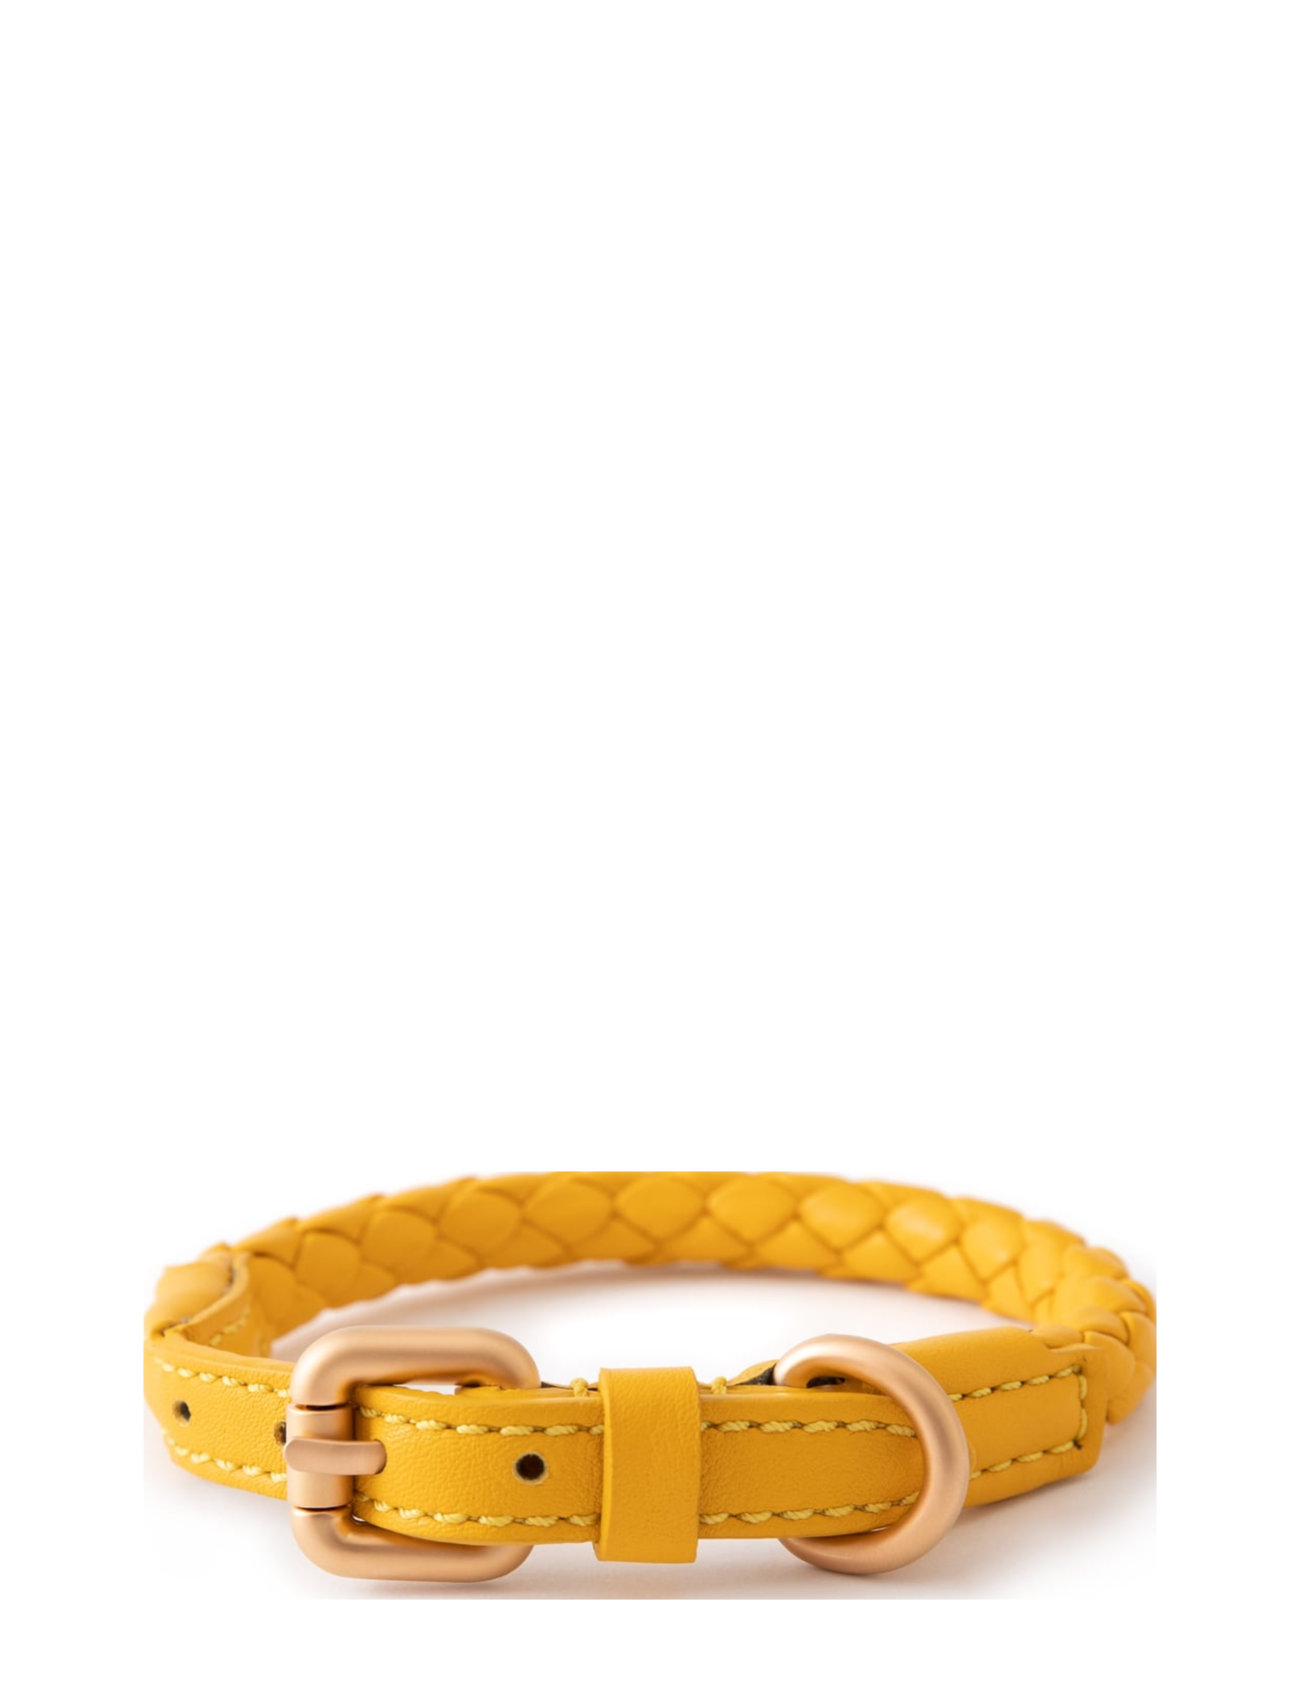 Ferdinando Collar Home Pets Dog Collars Yellow 2.8 Design For Dogs